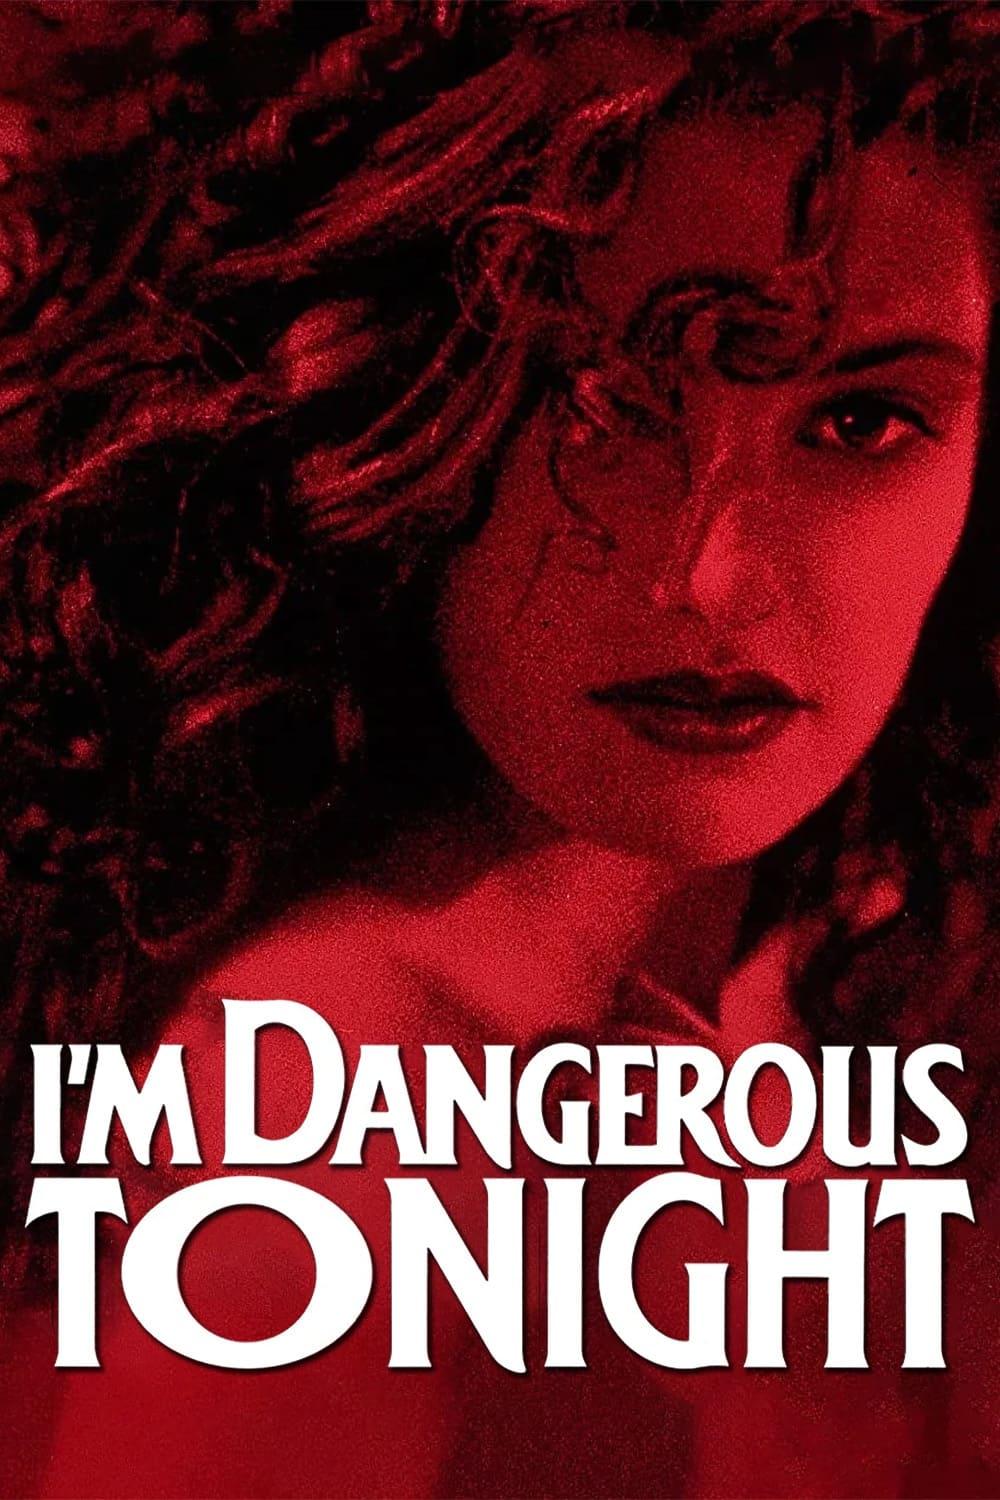 I'm Dangerous Tonight poster